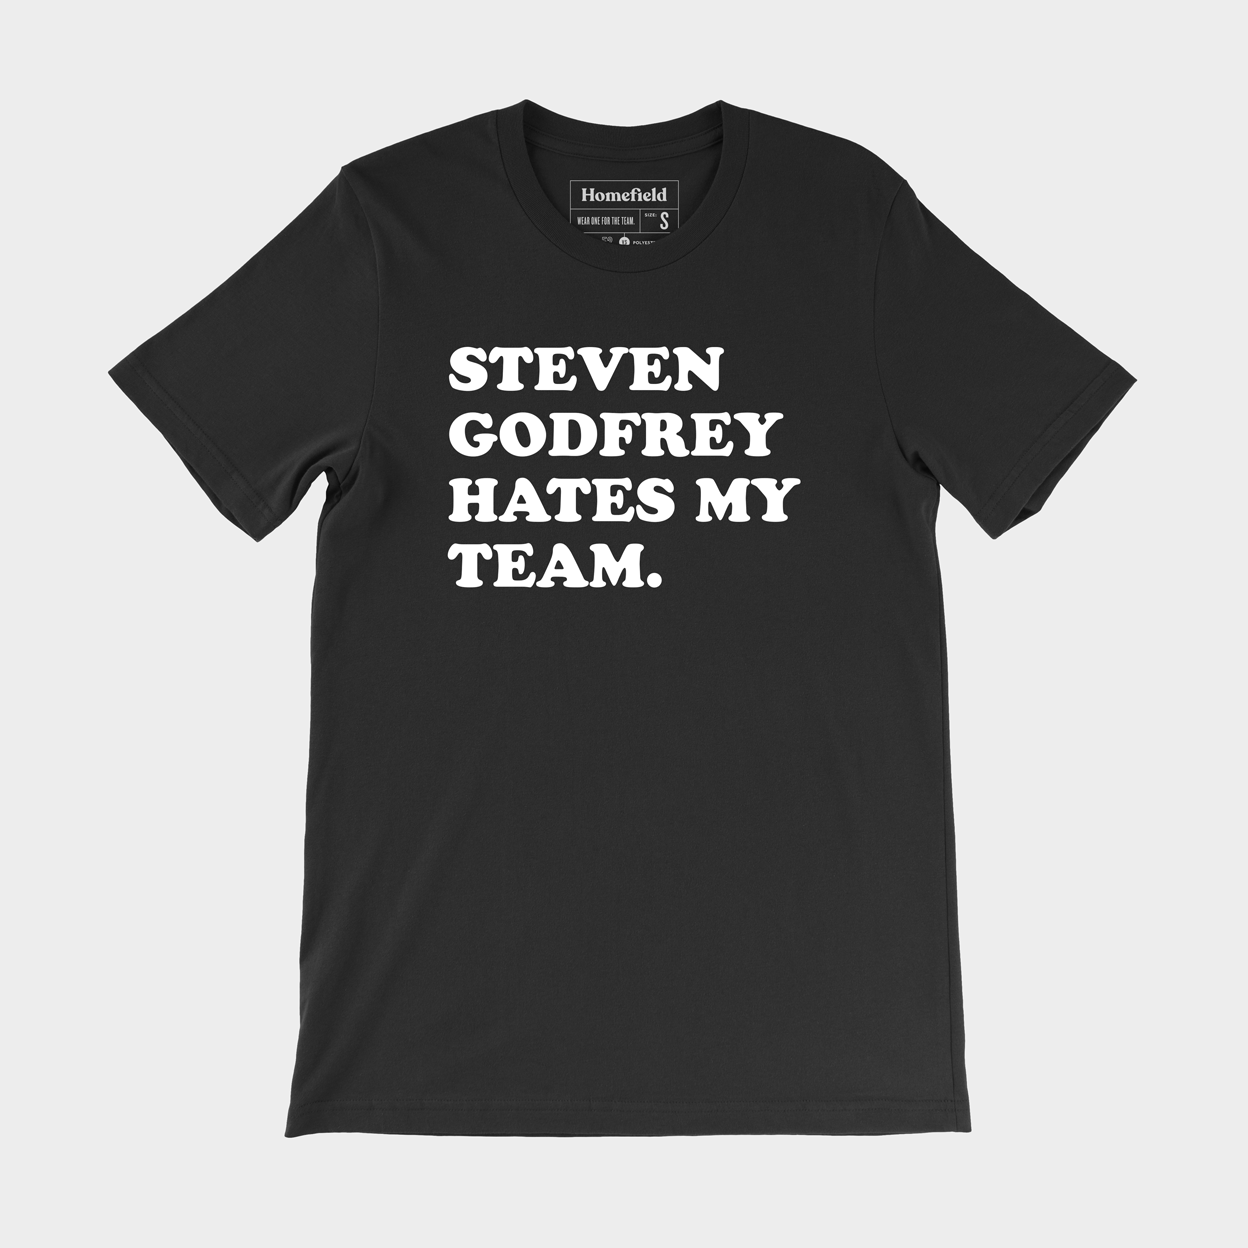 Steven Godfrey Hates My Team Tee